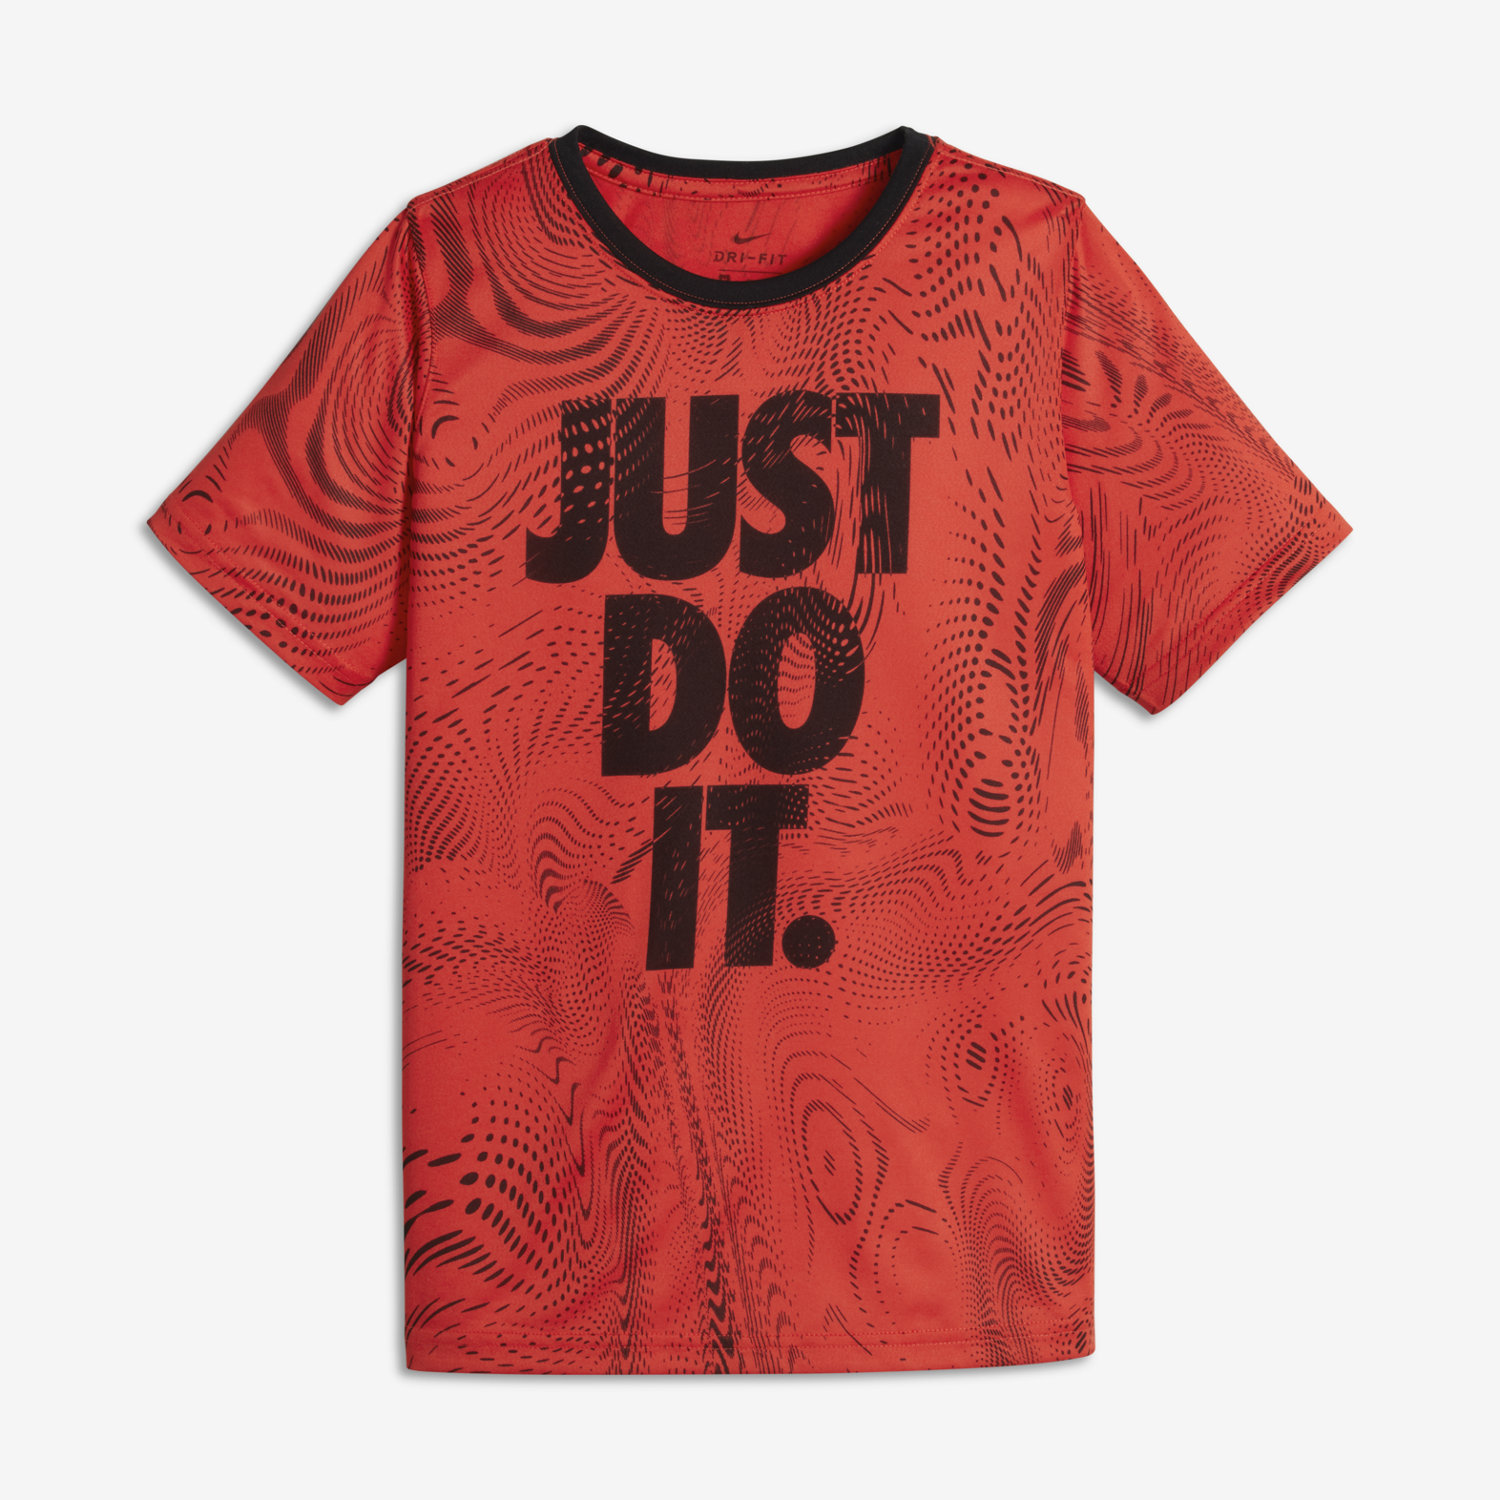 Nike Dry Just Do It - Older Kids' (Boys') T-Shirt